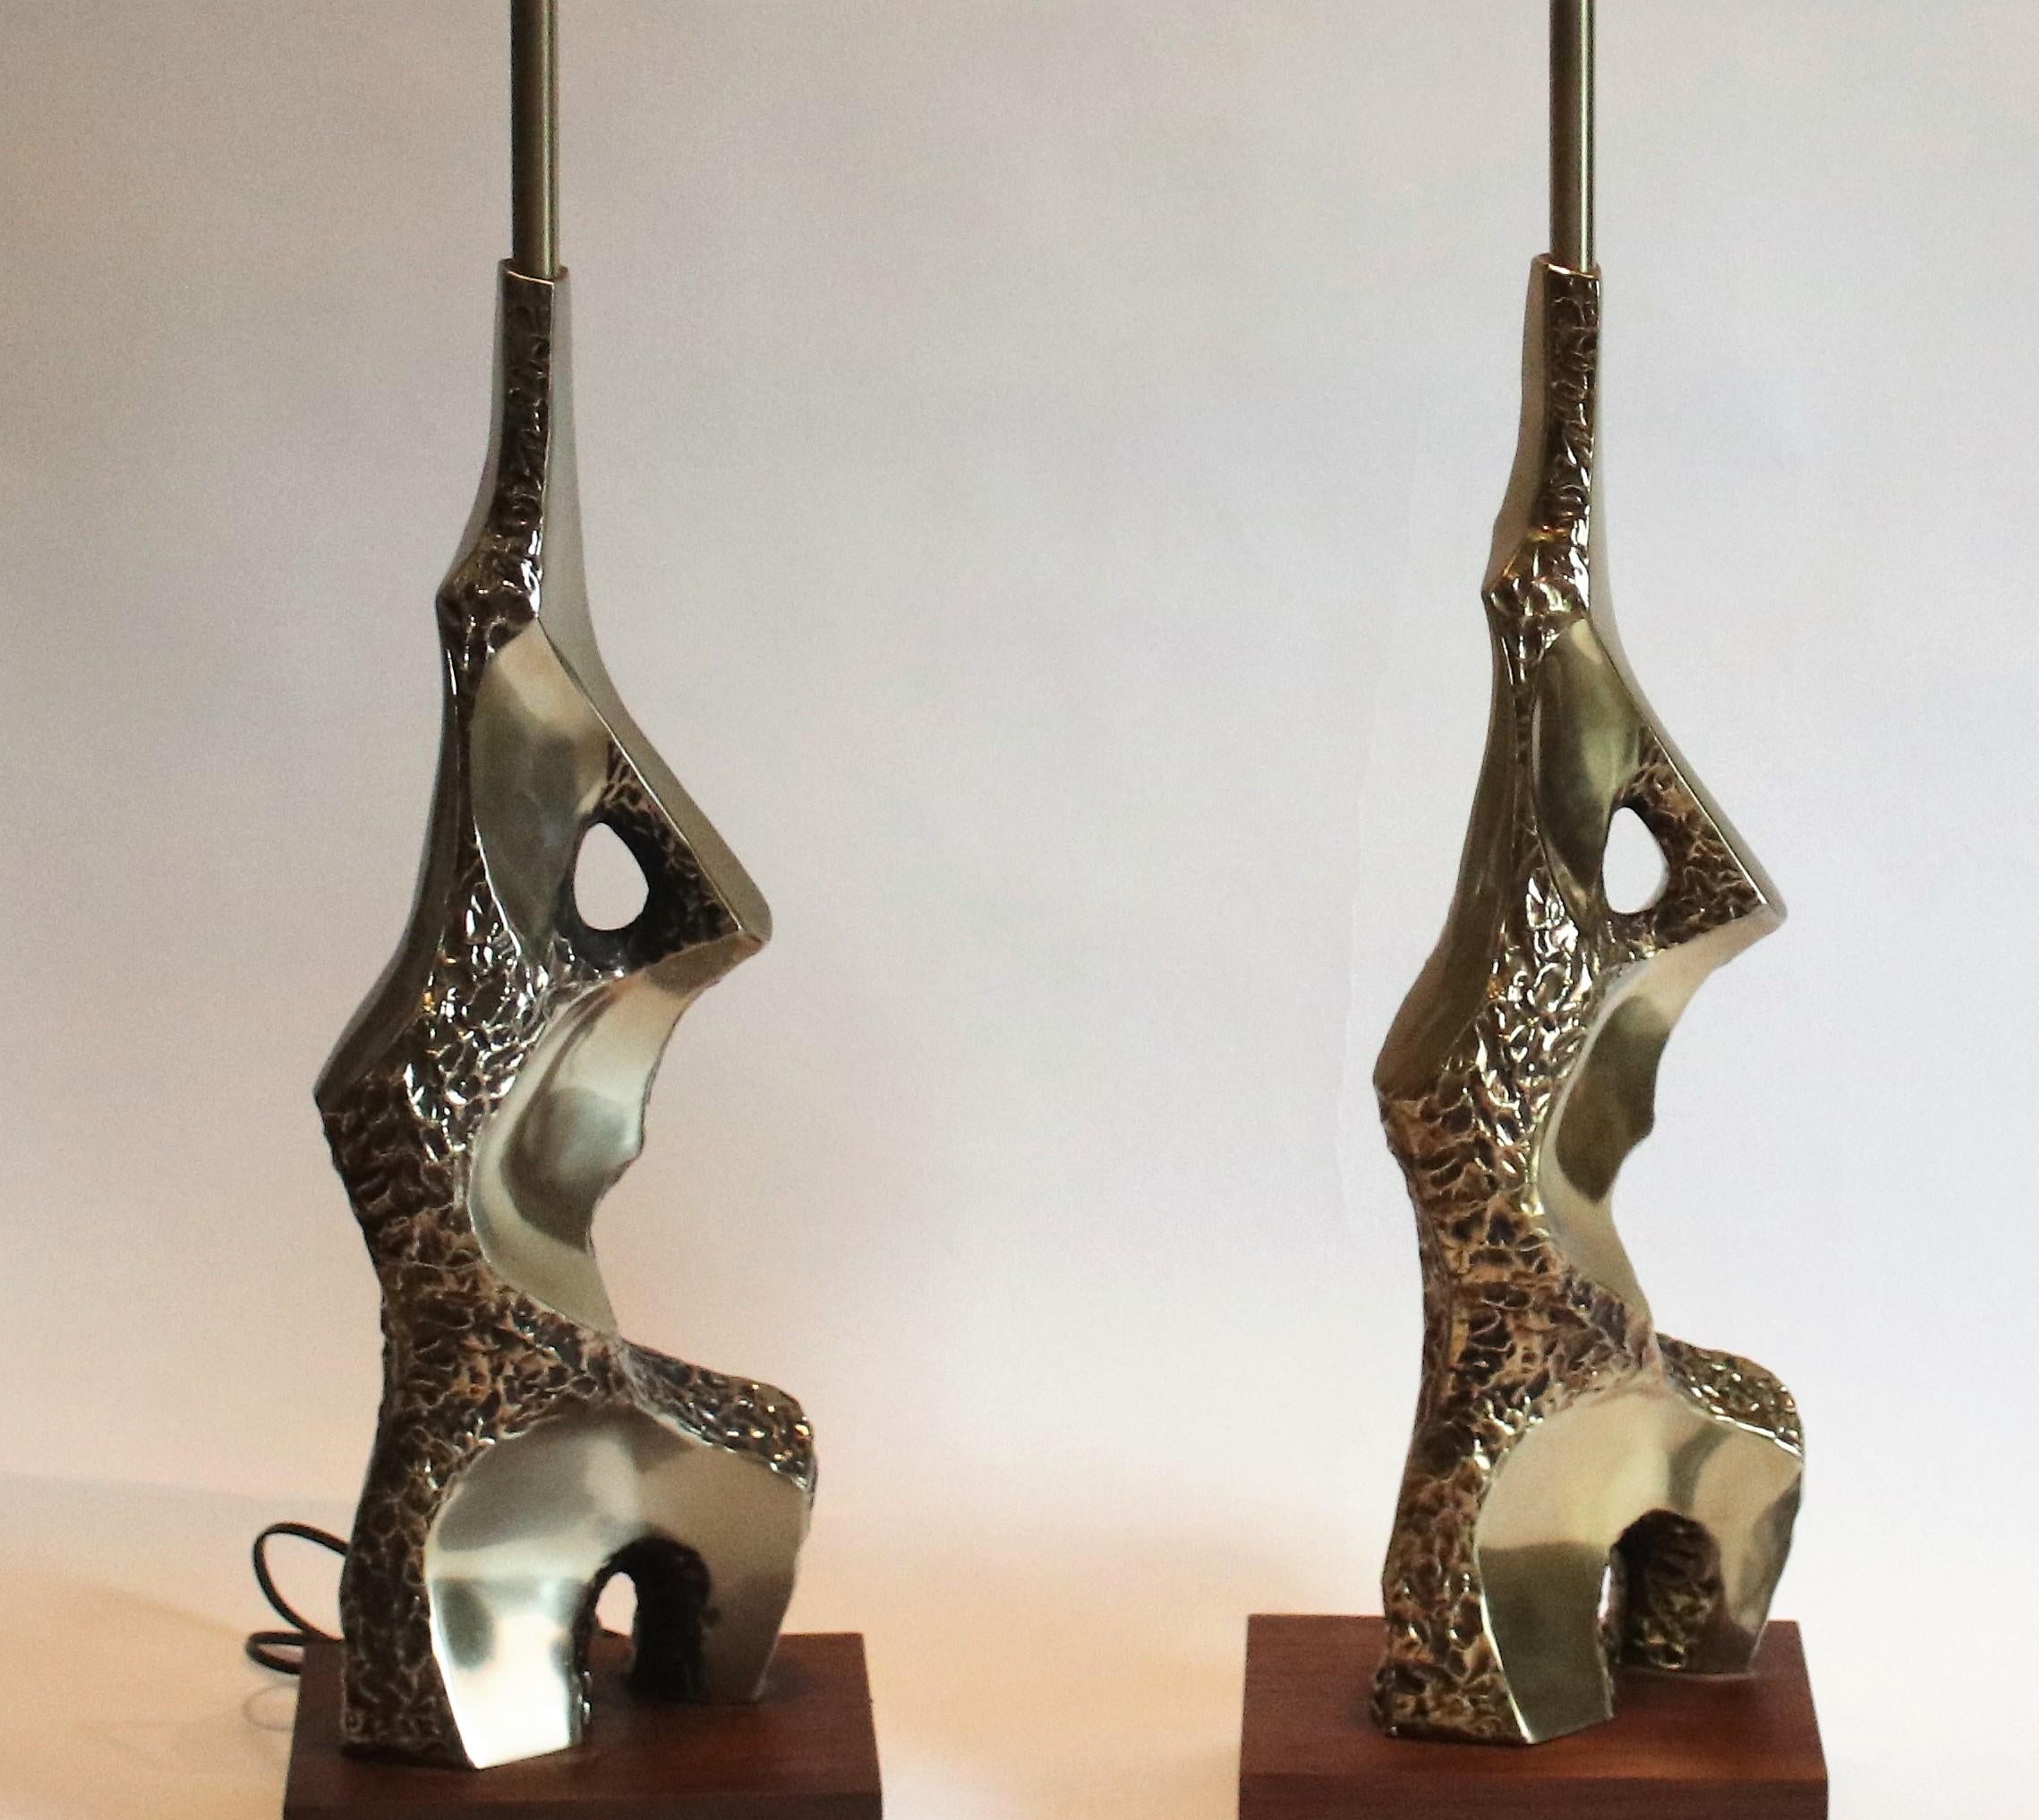 North American Pair of Sculptural Brutalist Lamps by Laurel